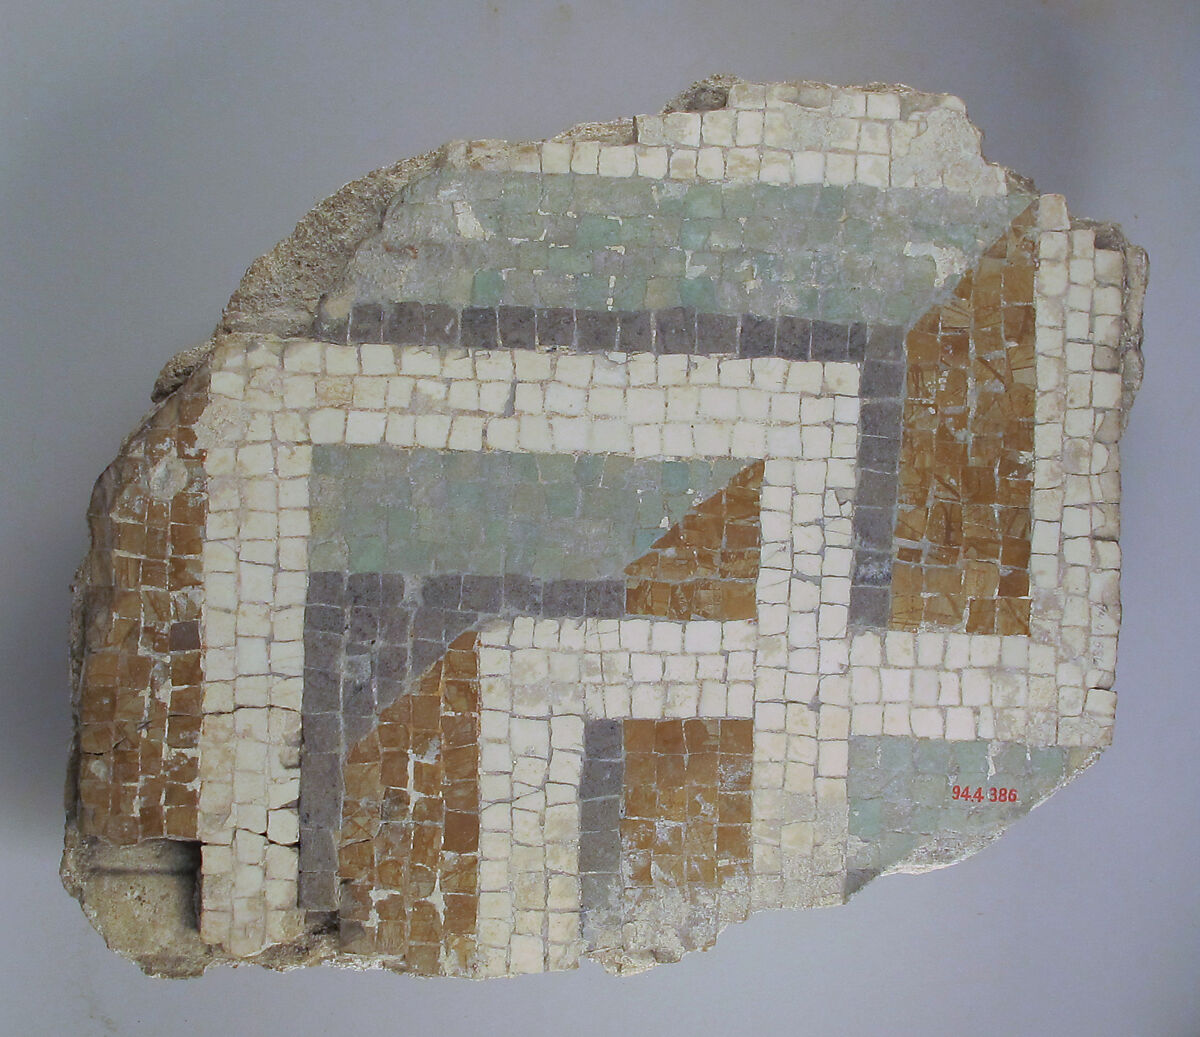 Mosaic floor fragment, Tile, mortar, Roman 